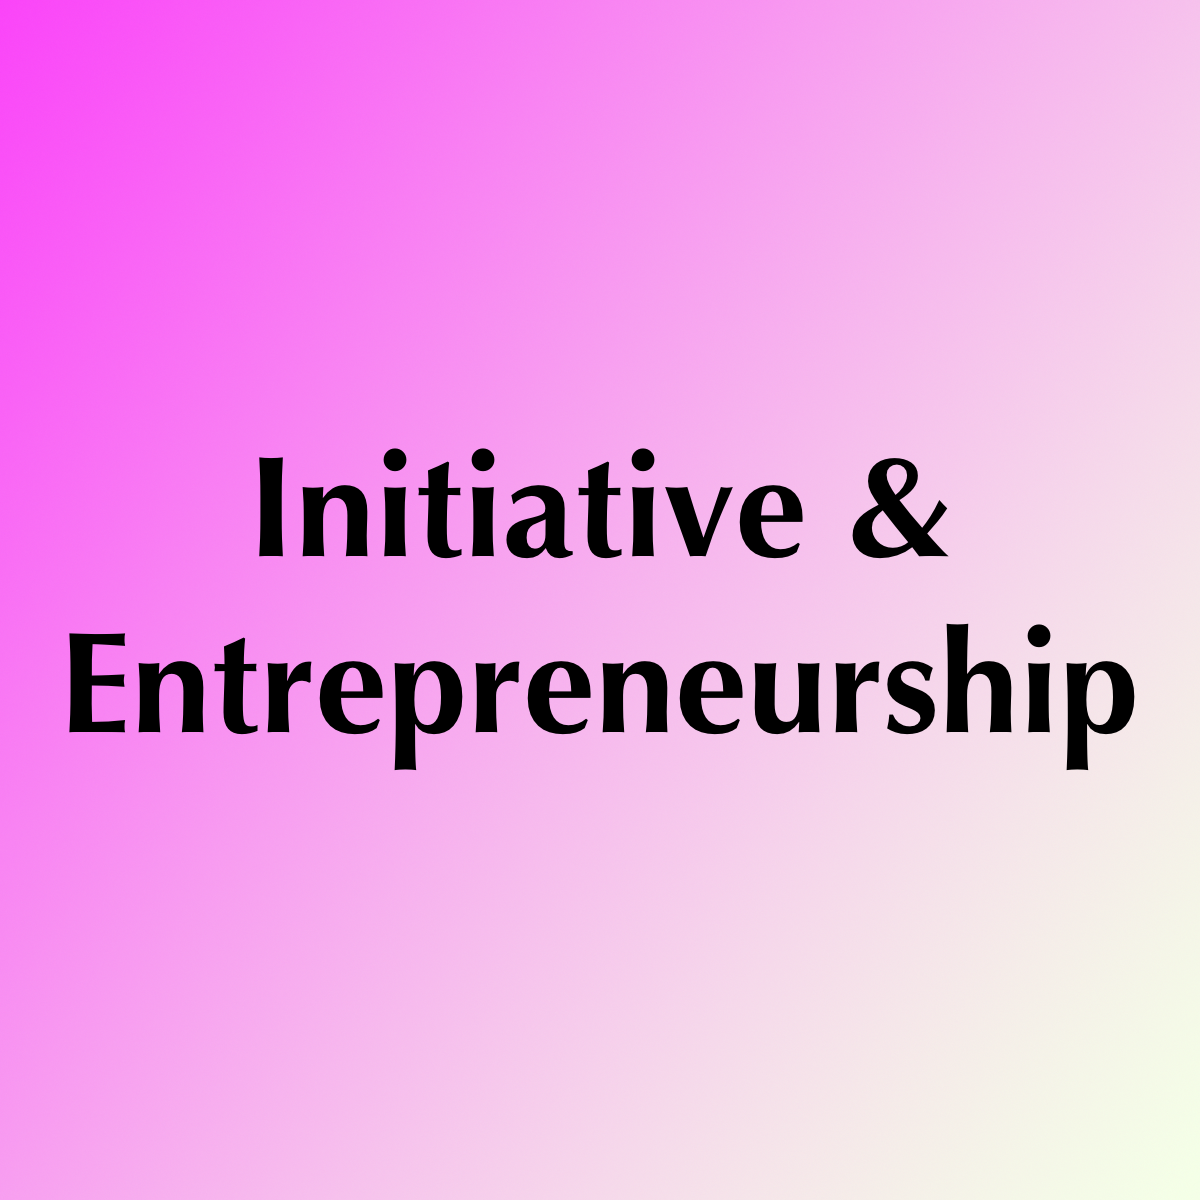 Initiative & Entrepreneurship